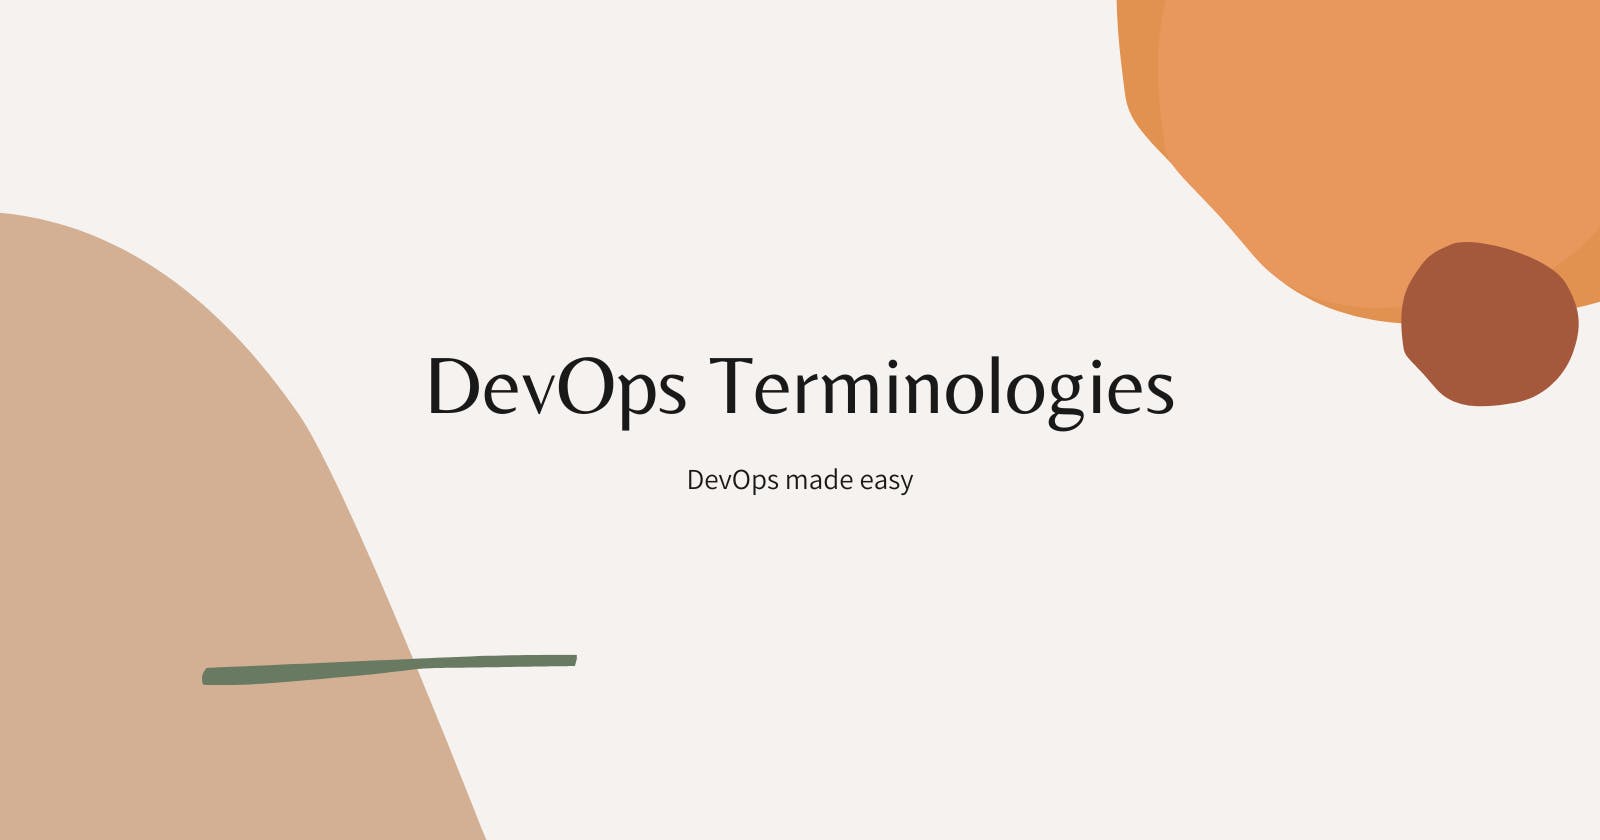 Title: 11 Essential DevOps Terminologies You Should Master